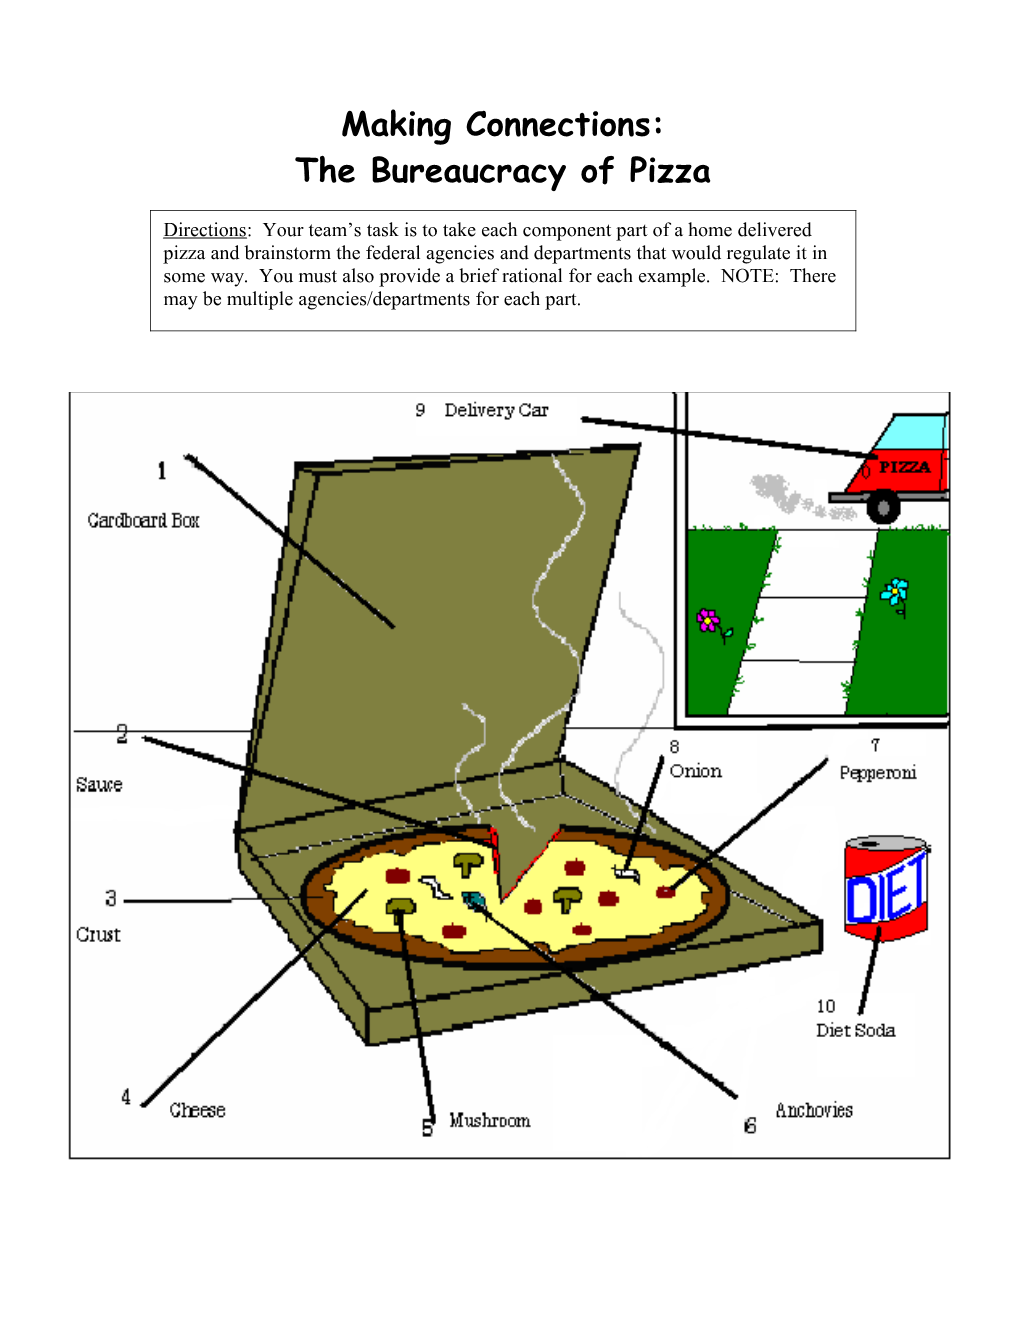 The Bureaucracy of Pizza